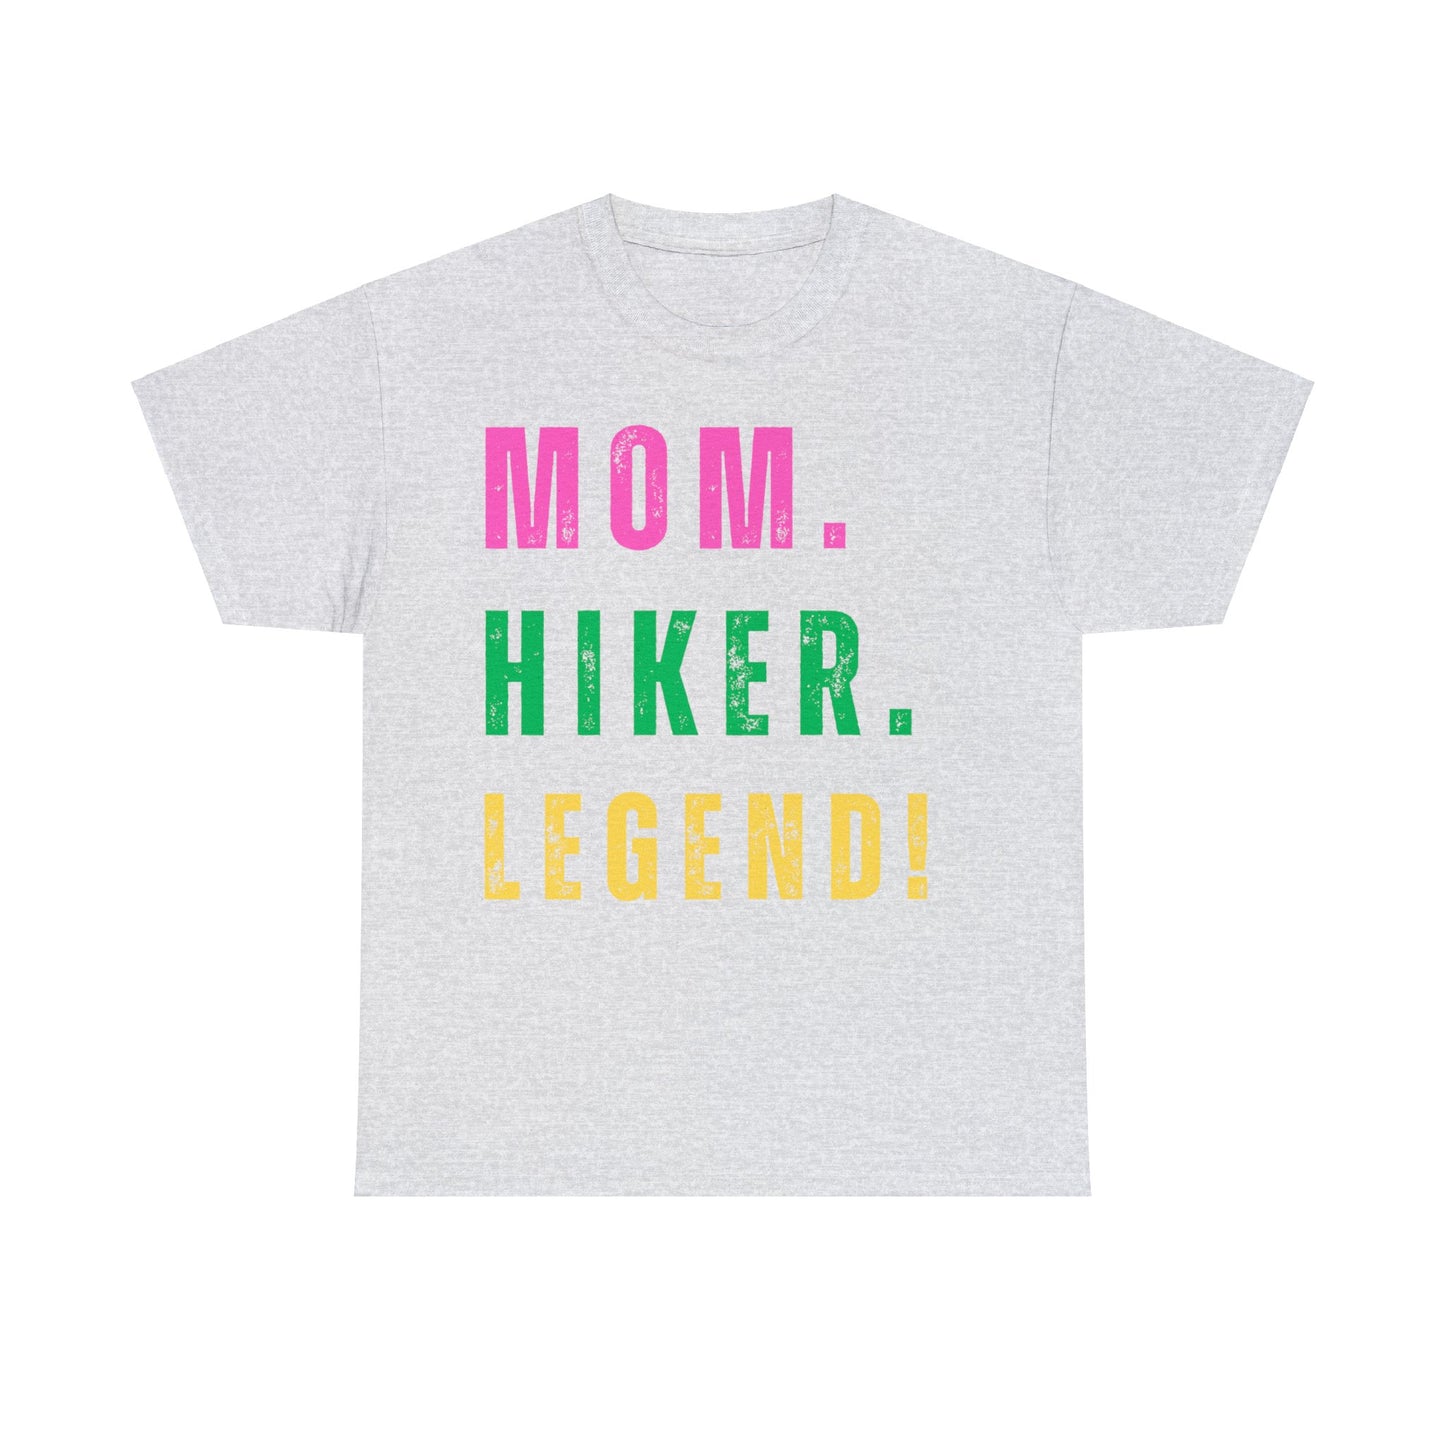 MOM. HIKER. LEGEND. T-Shirt - SPECIAL GIFT - NOT SOLD IN STORES - Mother's Day, Birthday, Hiker, Trekker, Adventurer. Mother, Hiking, Trekking, Adventure Lover